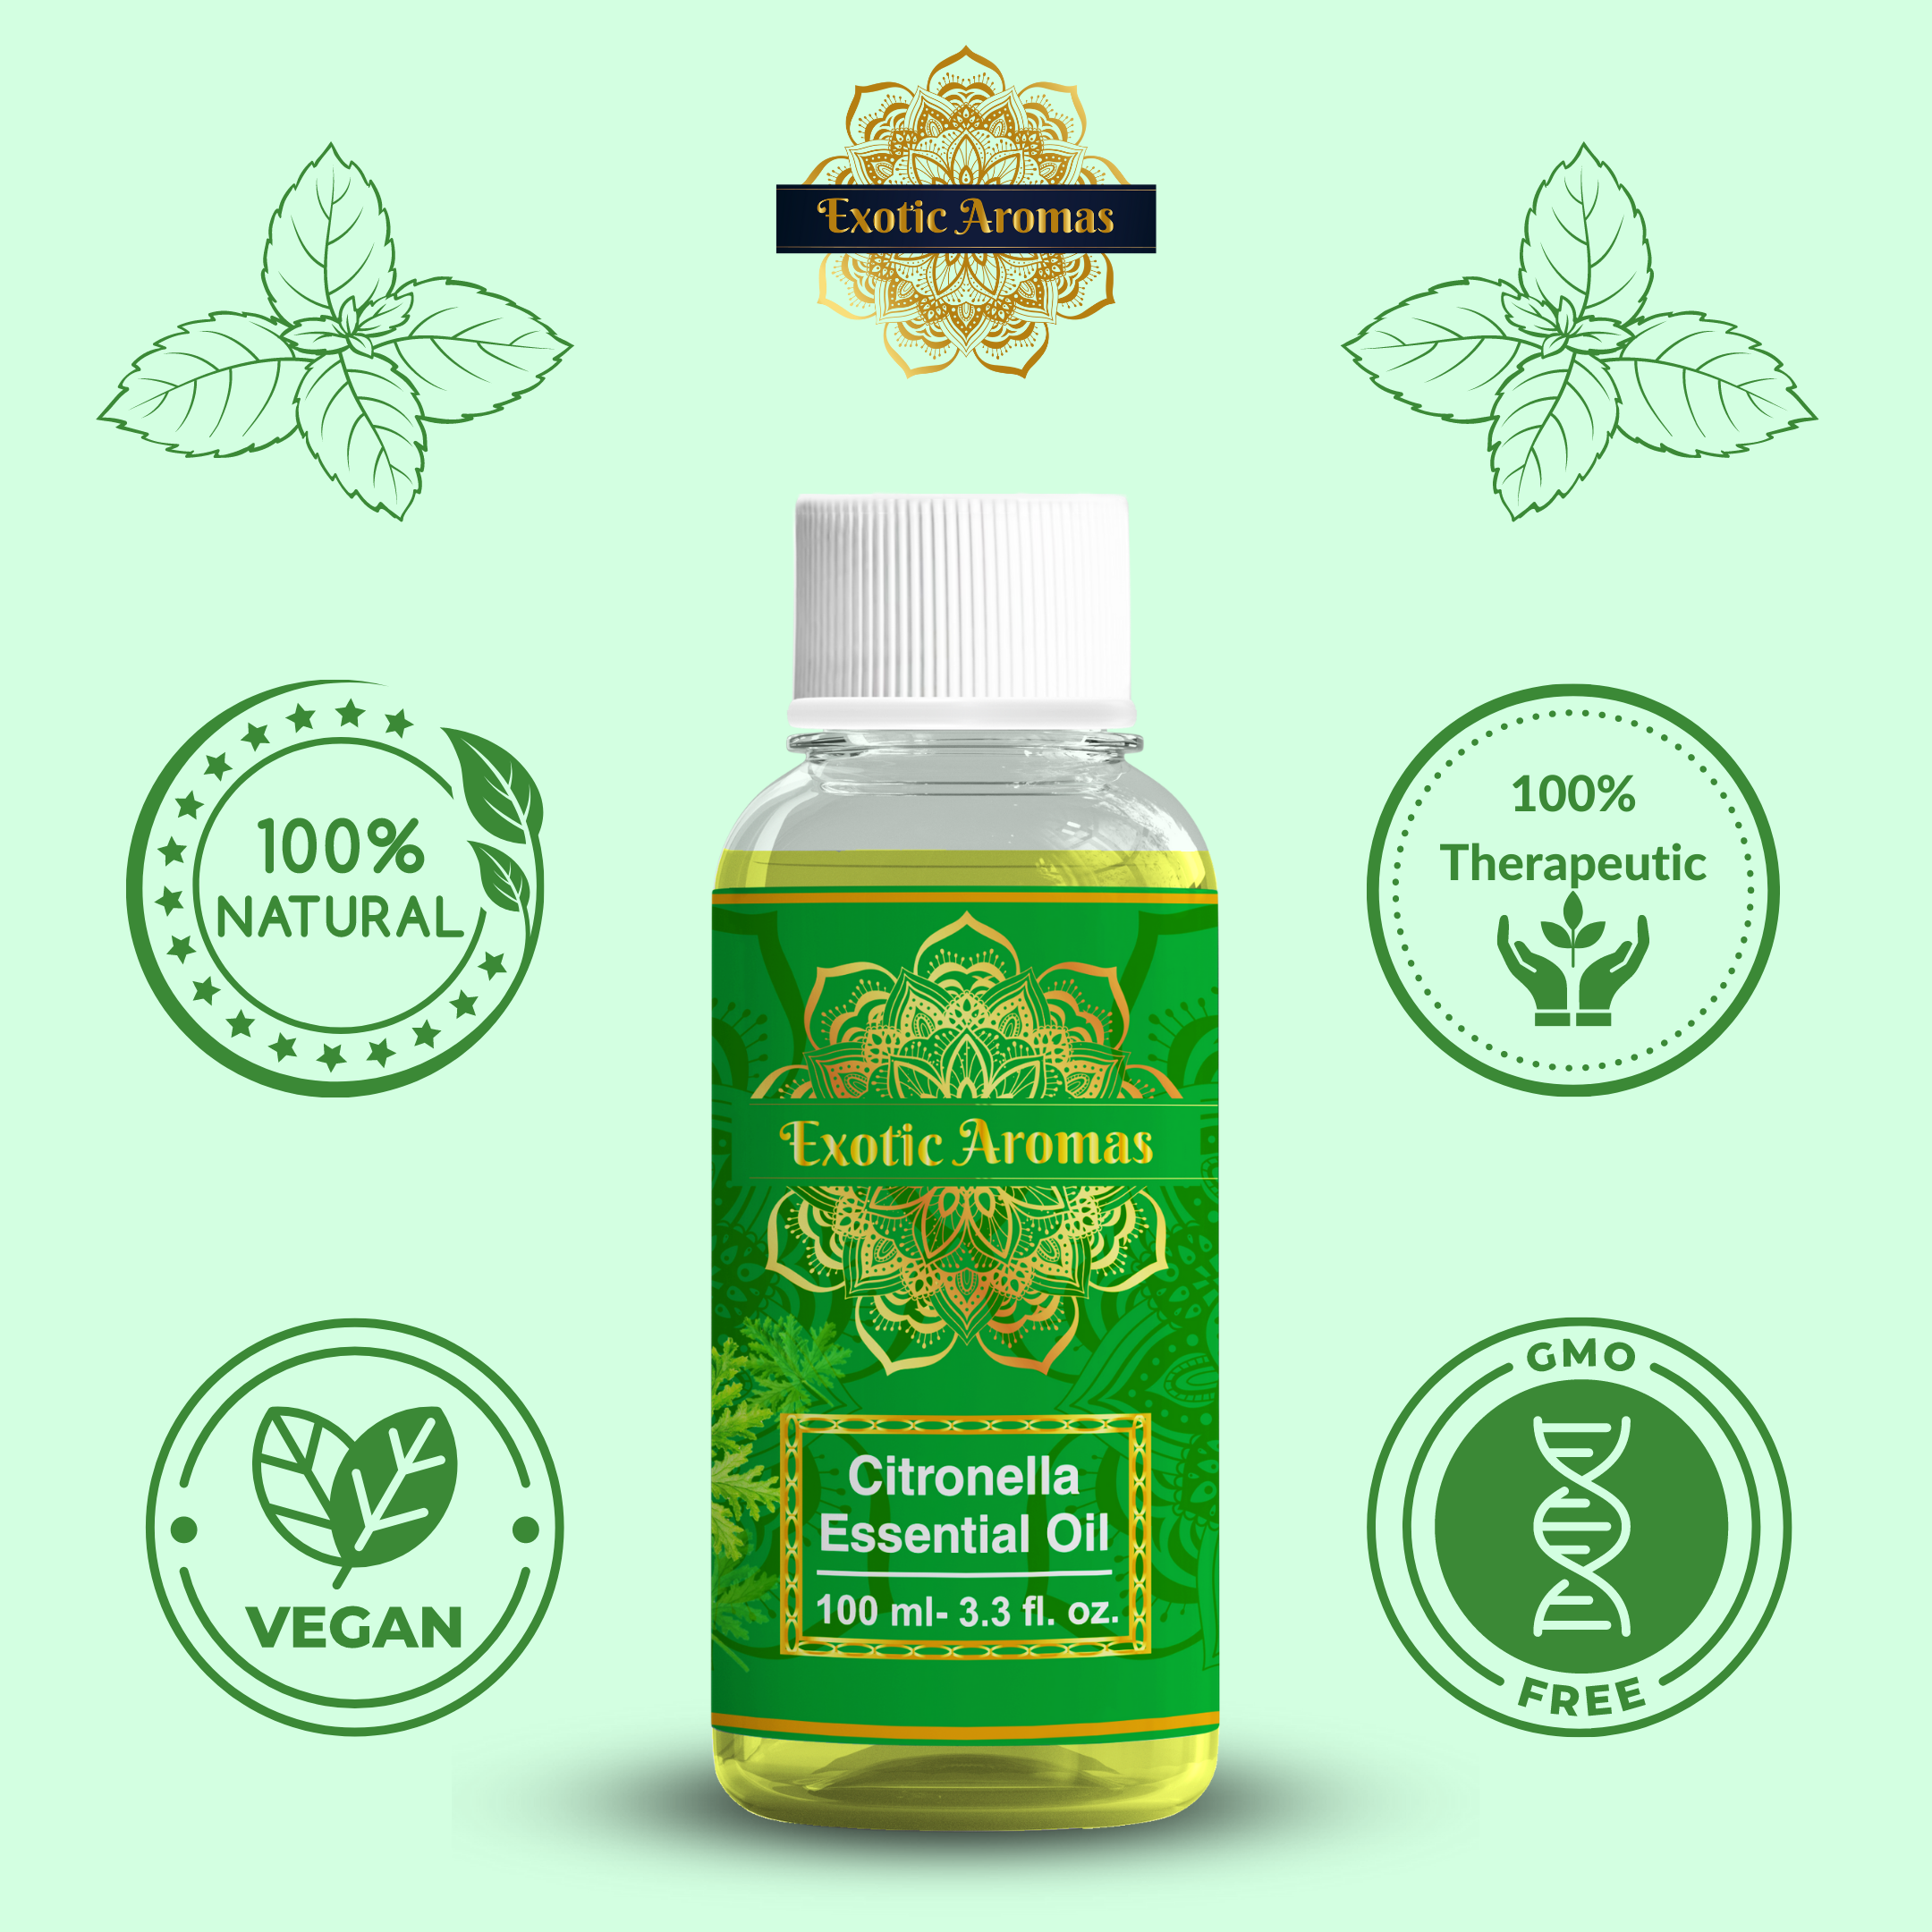 Citronella Essential Oil for Aroma Therapy, Hair & Skin